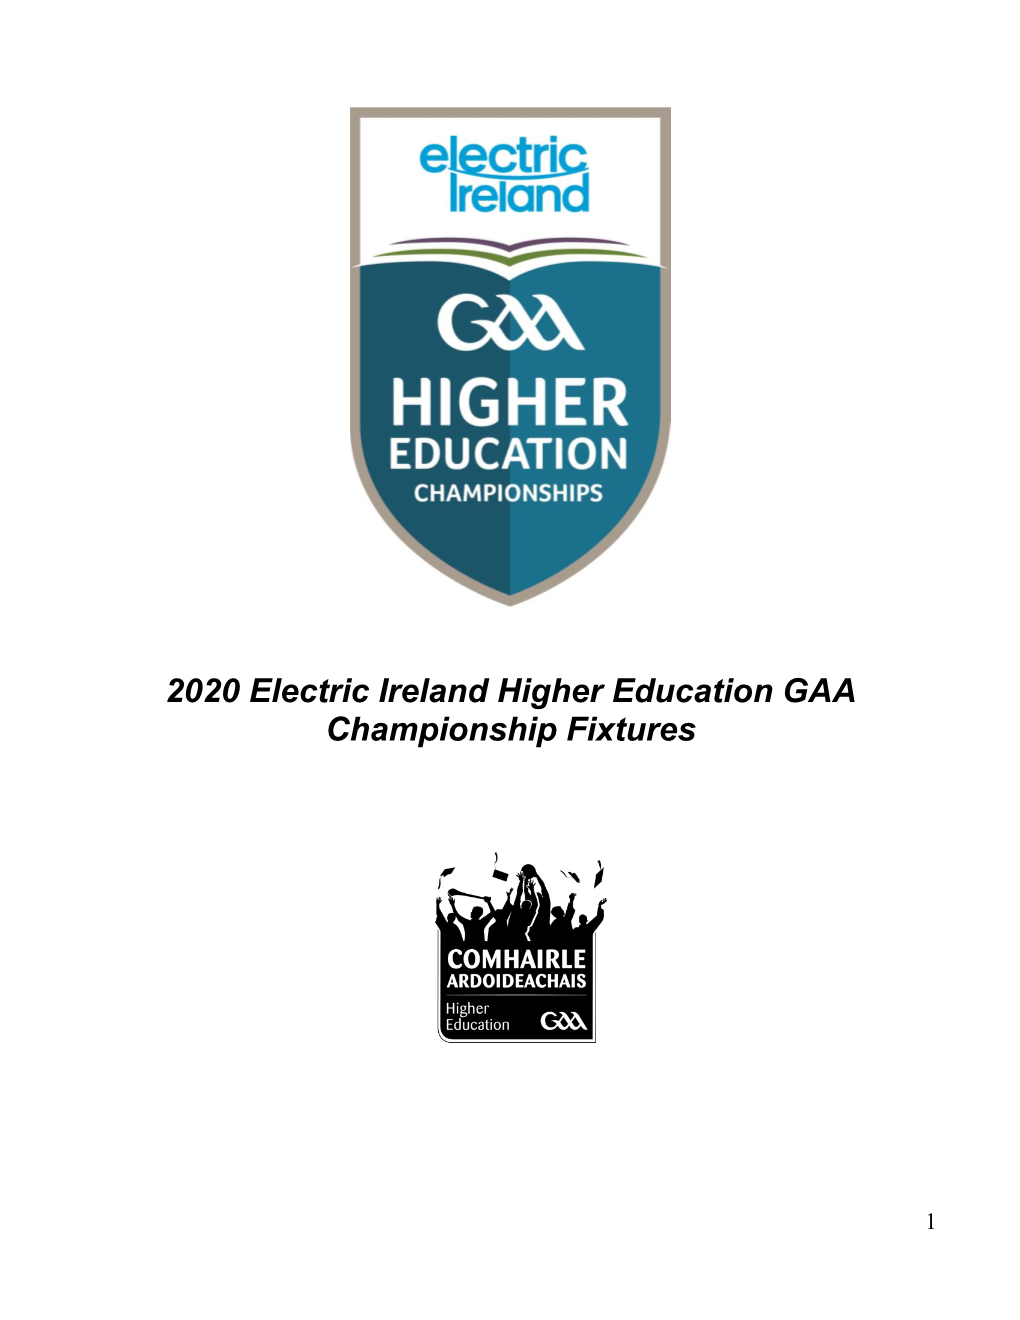 2020 Electric Ireland Higher Education GAA Championship Fixtures